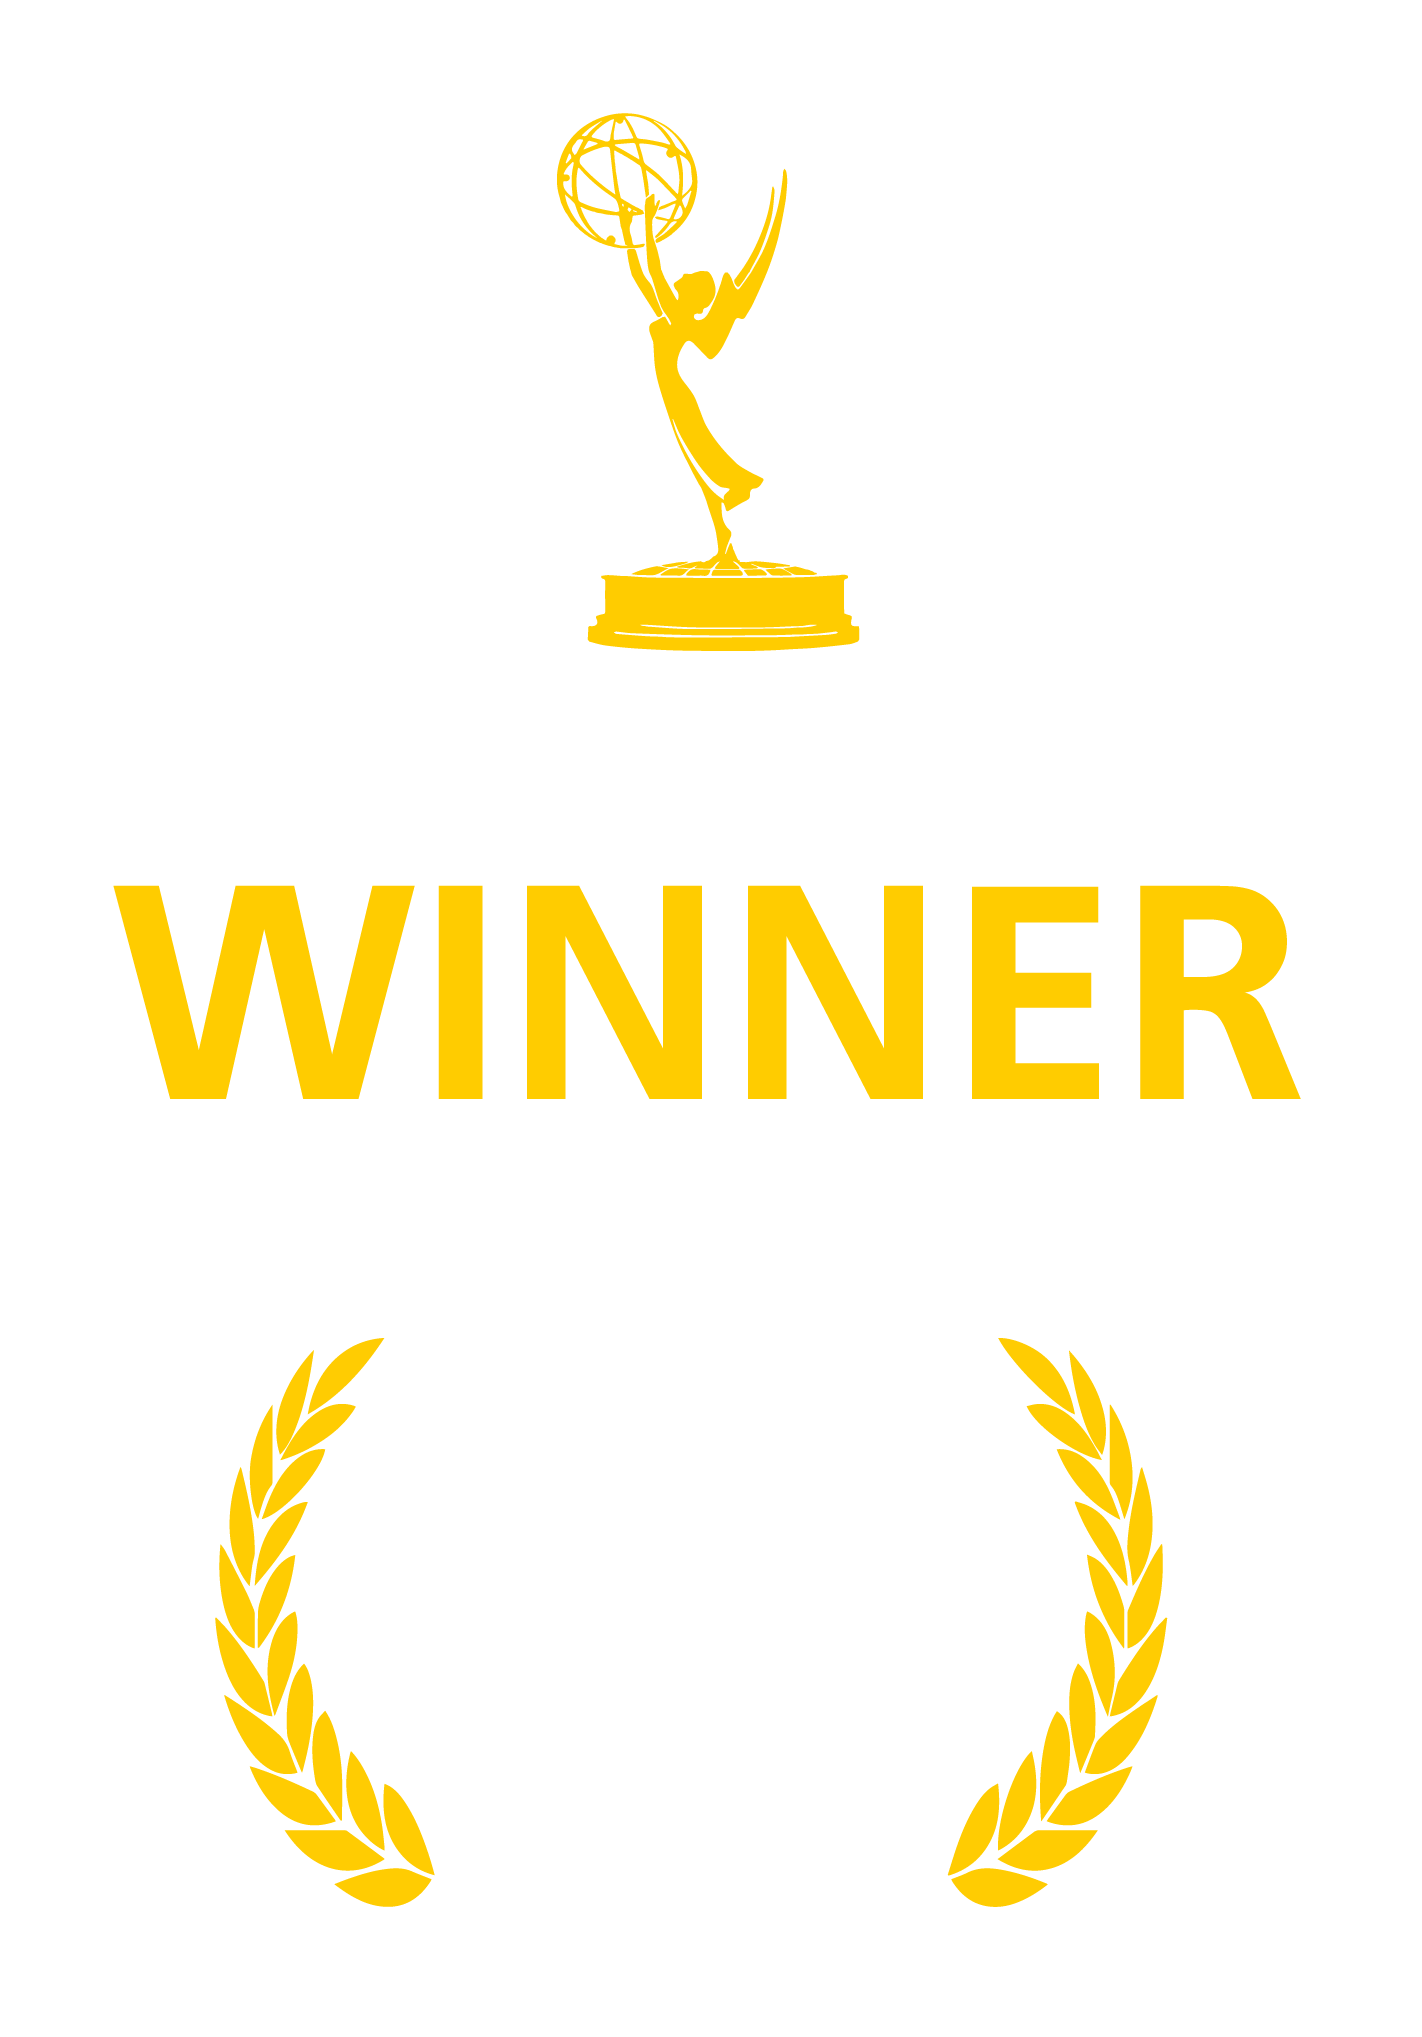 Emmy Winning logo with Laurel